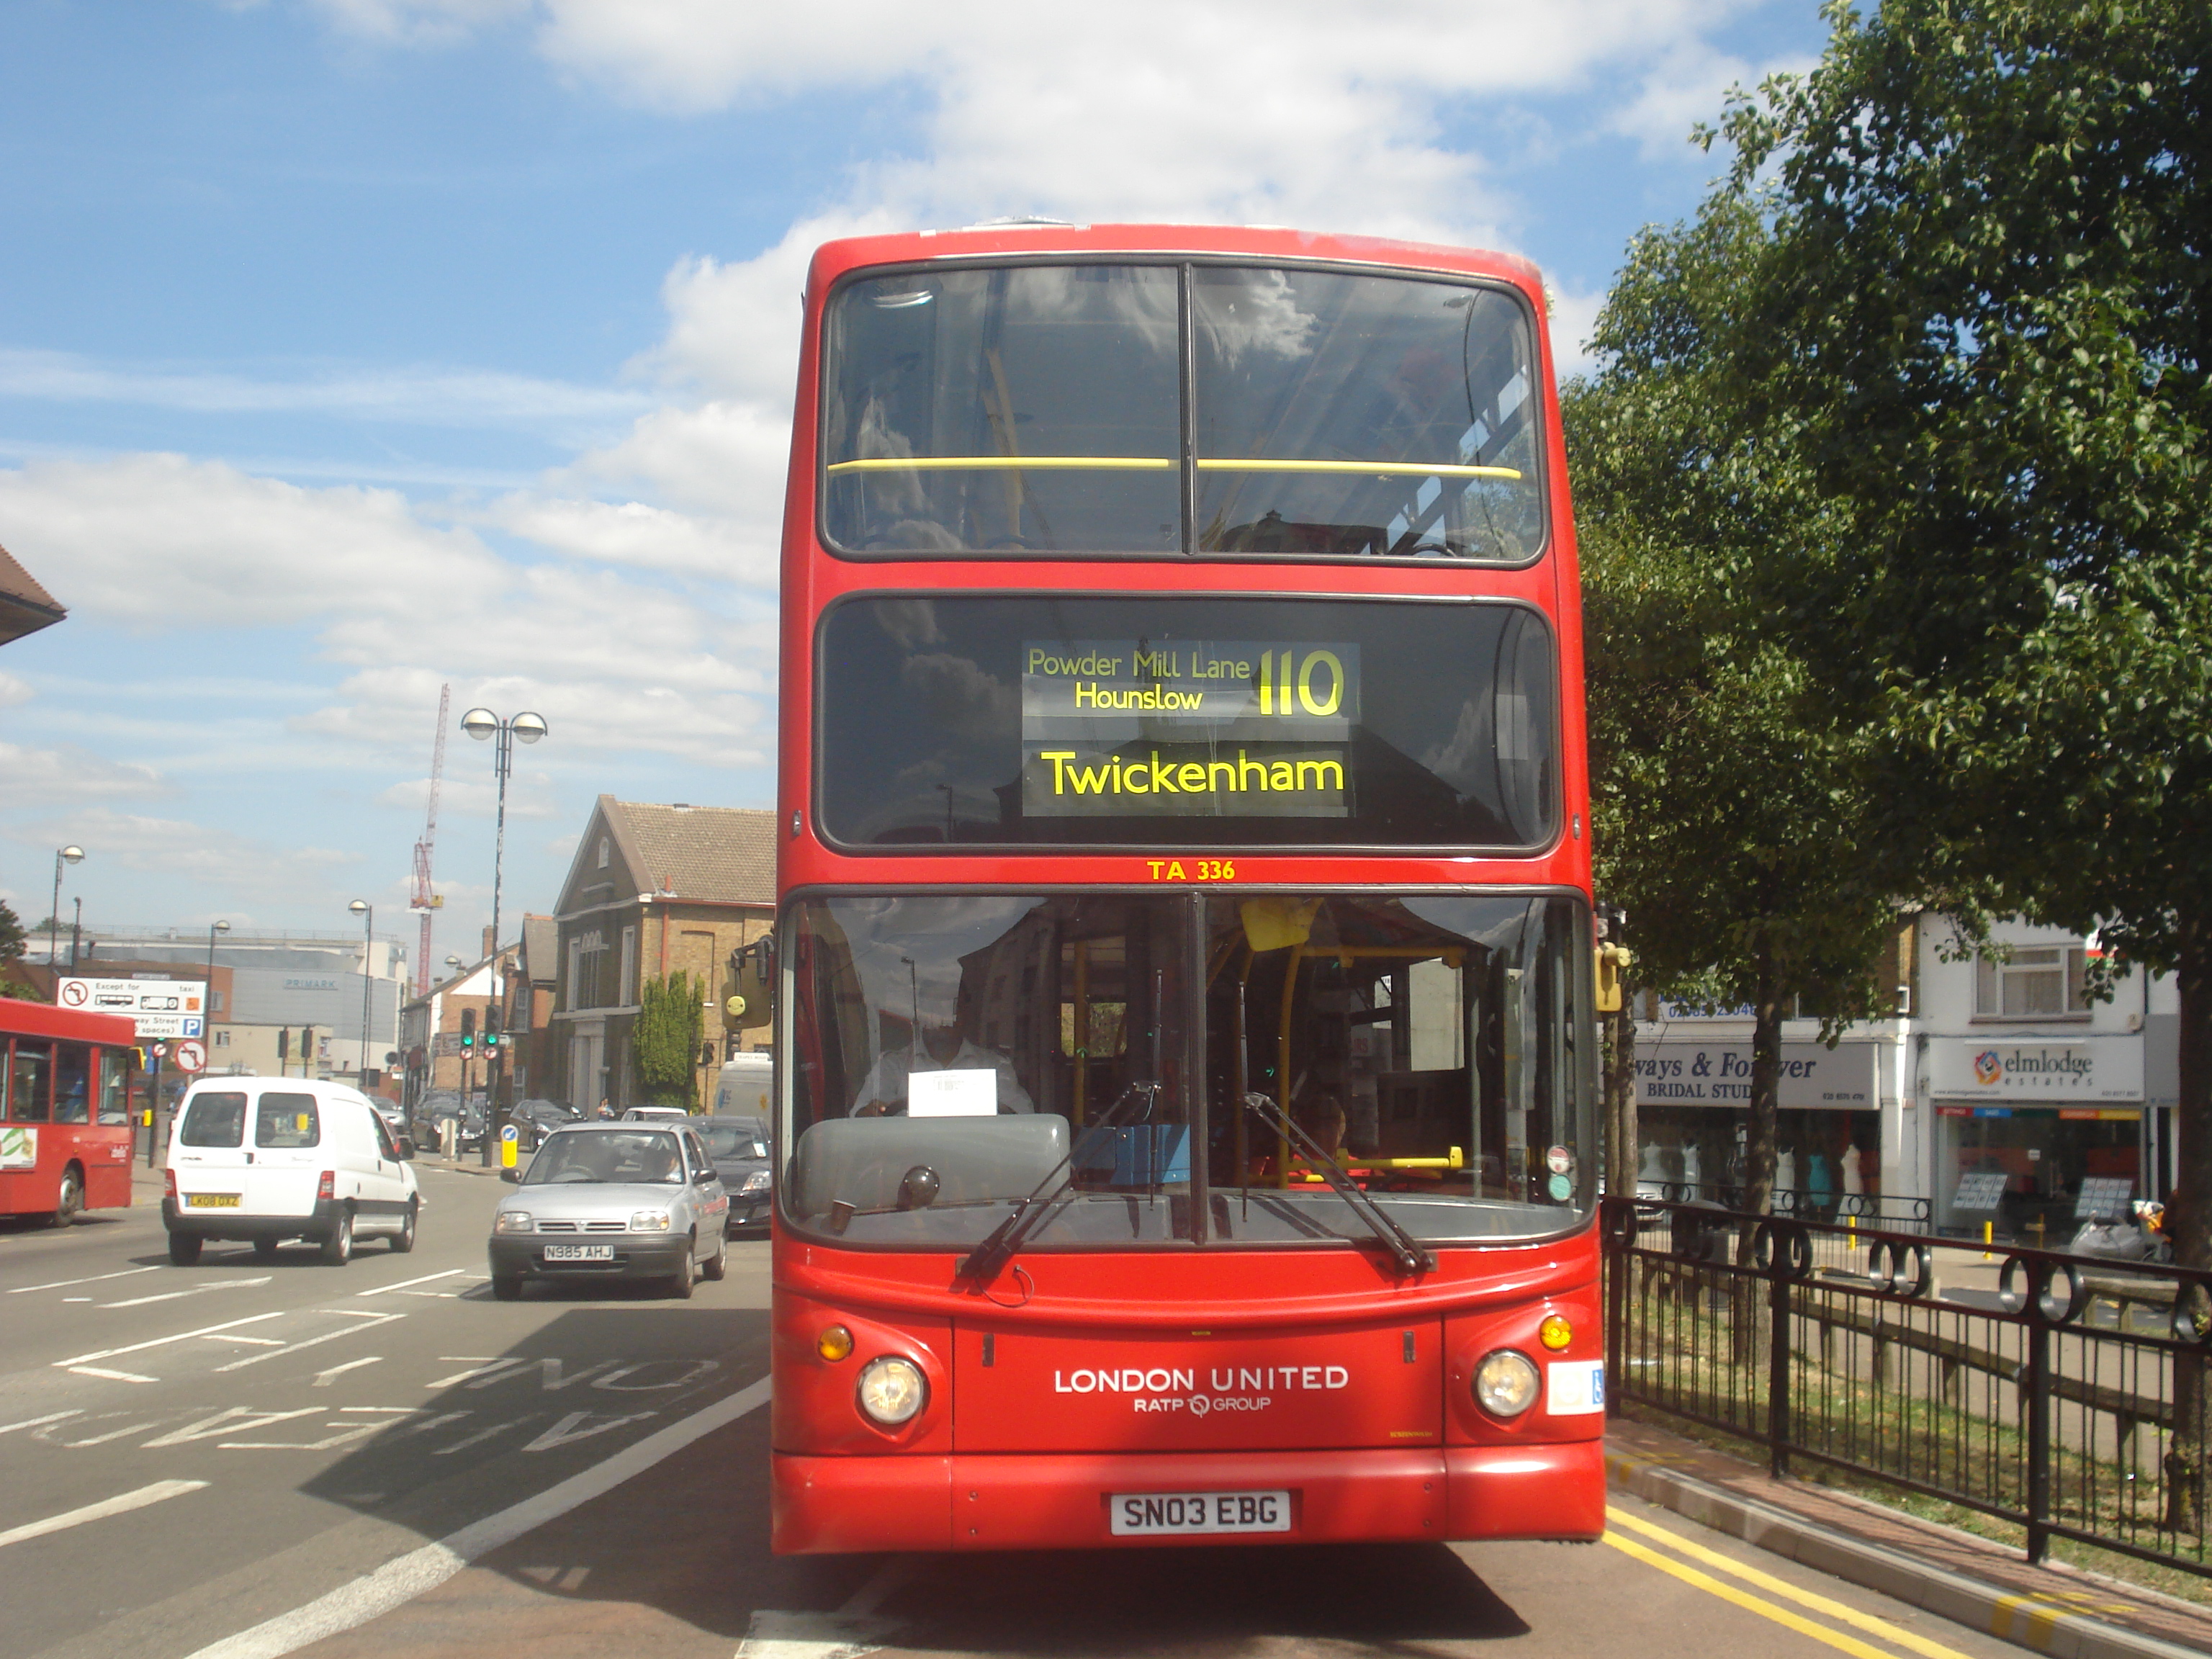 File:Au Morandarte Flickr London United TA336 on Route 110, Hounslow  (9562282563).jpg - Wikimedia Commons